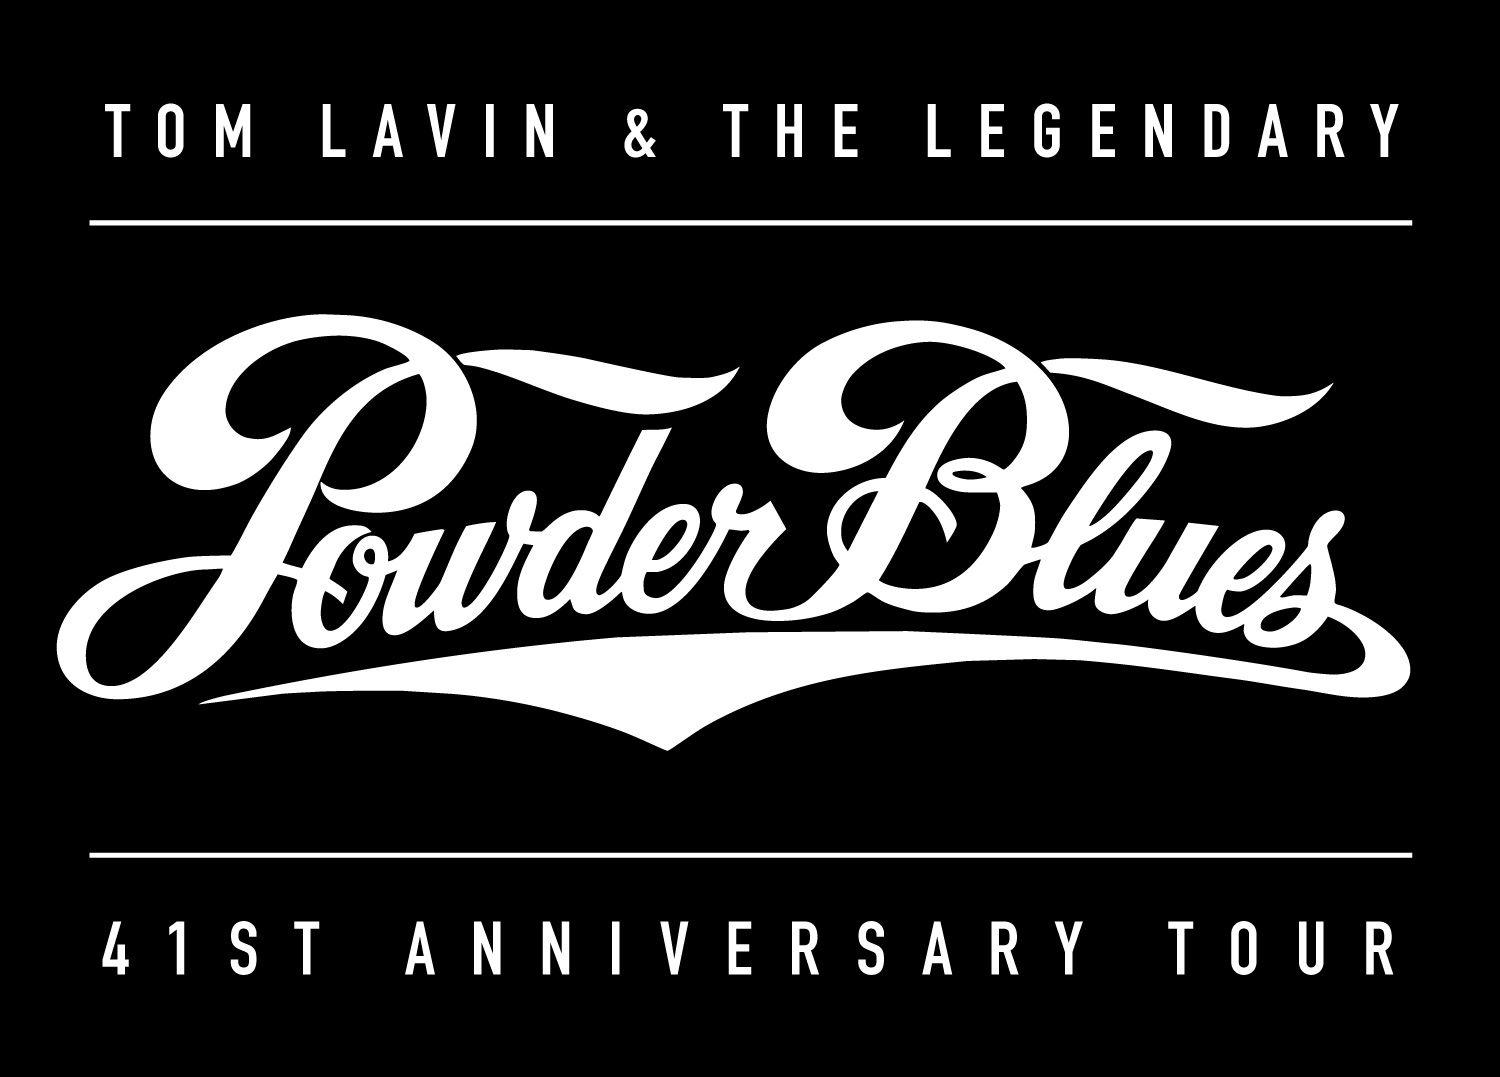 Dark Blue S Logo - Press Kit. Tom Lavin and the Legendary Powder Blues